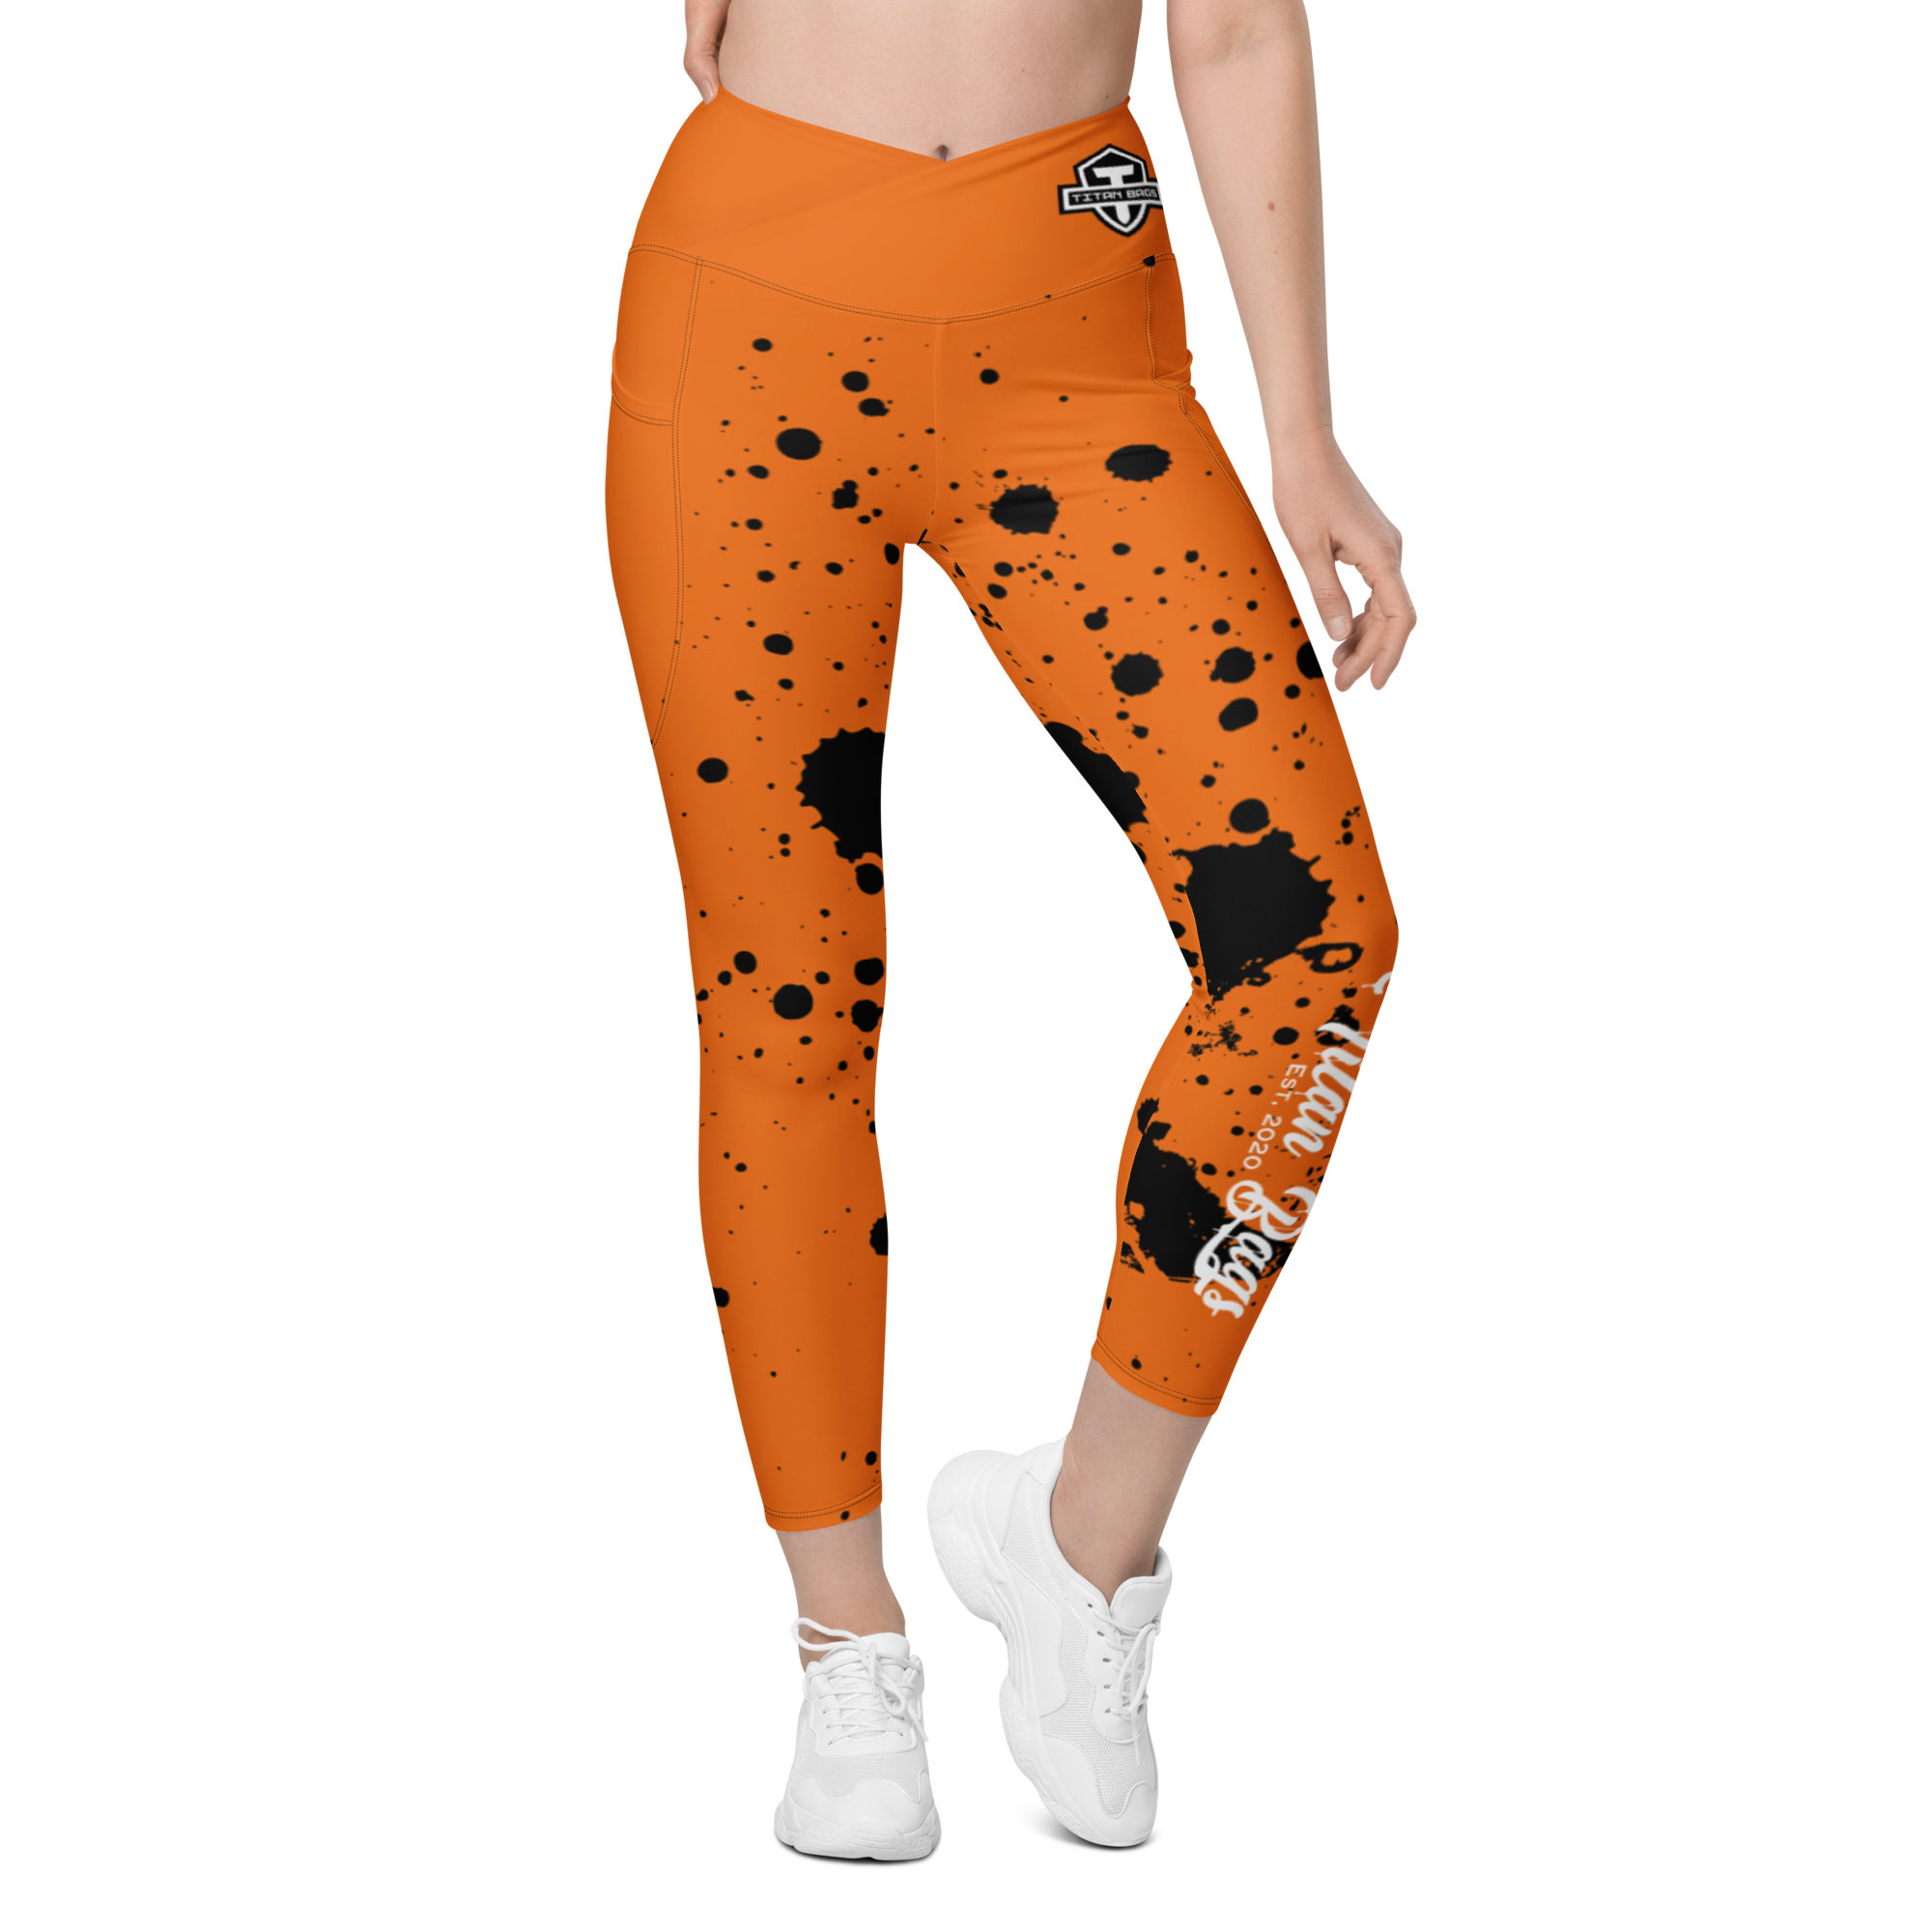 Orange Theory XL Gray & Black Athletic Running Yoga Leggings Pants